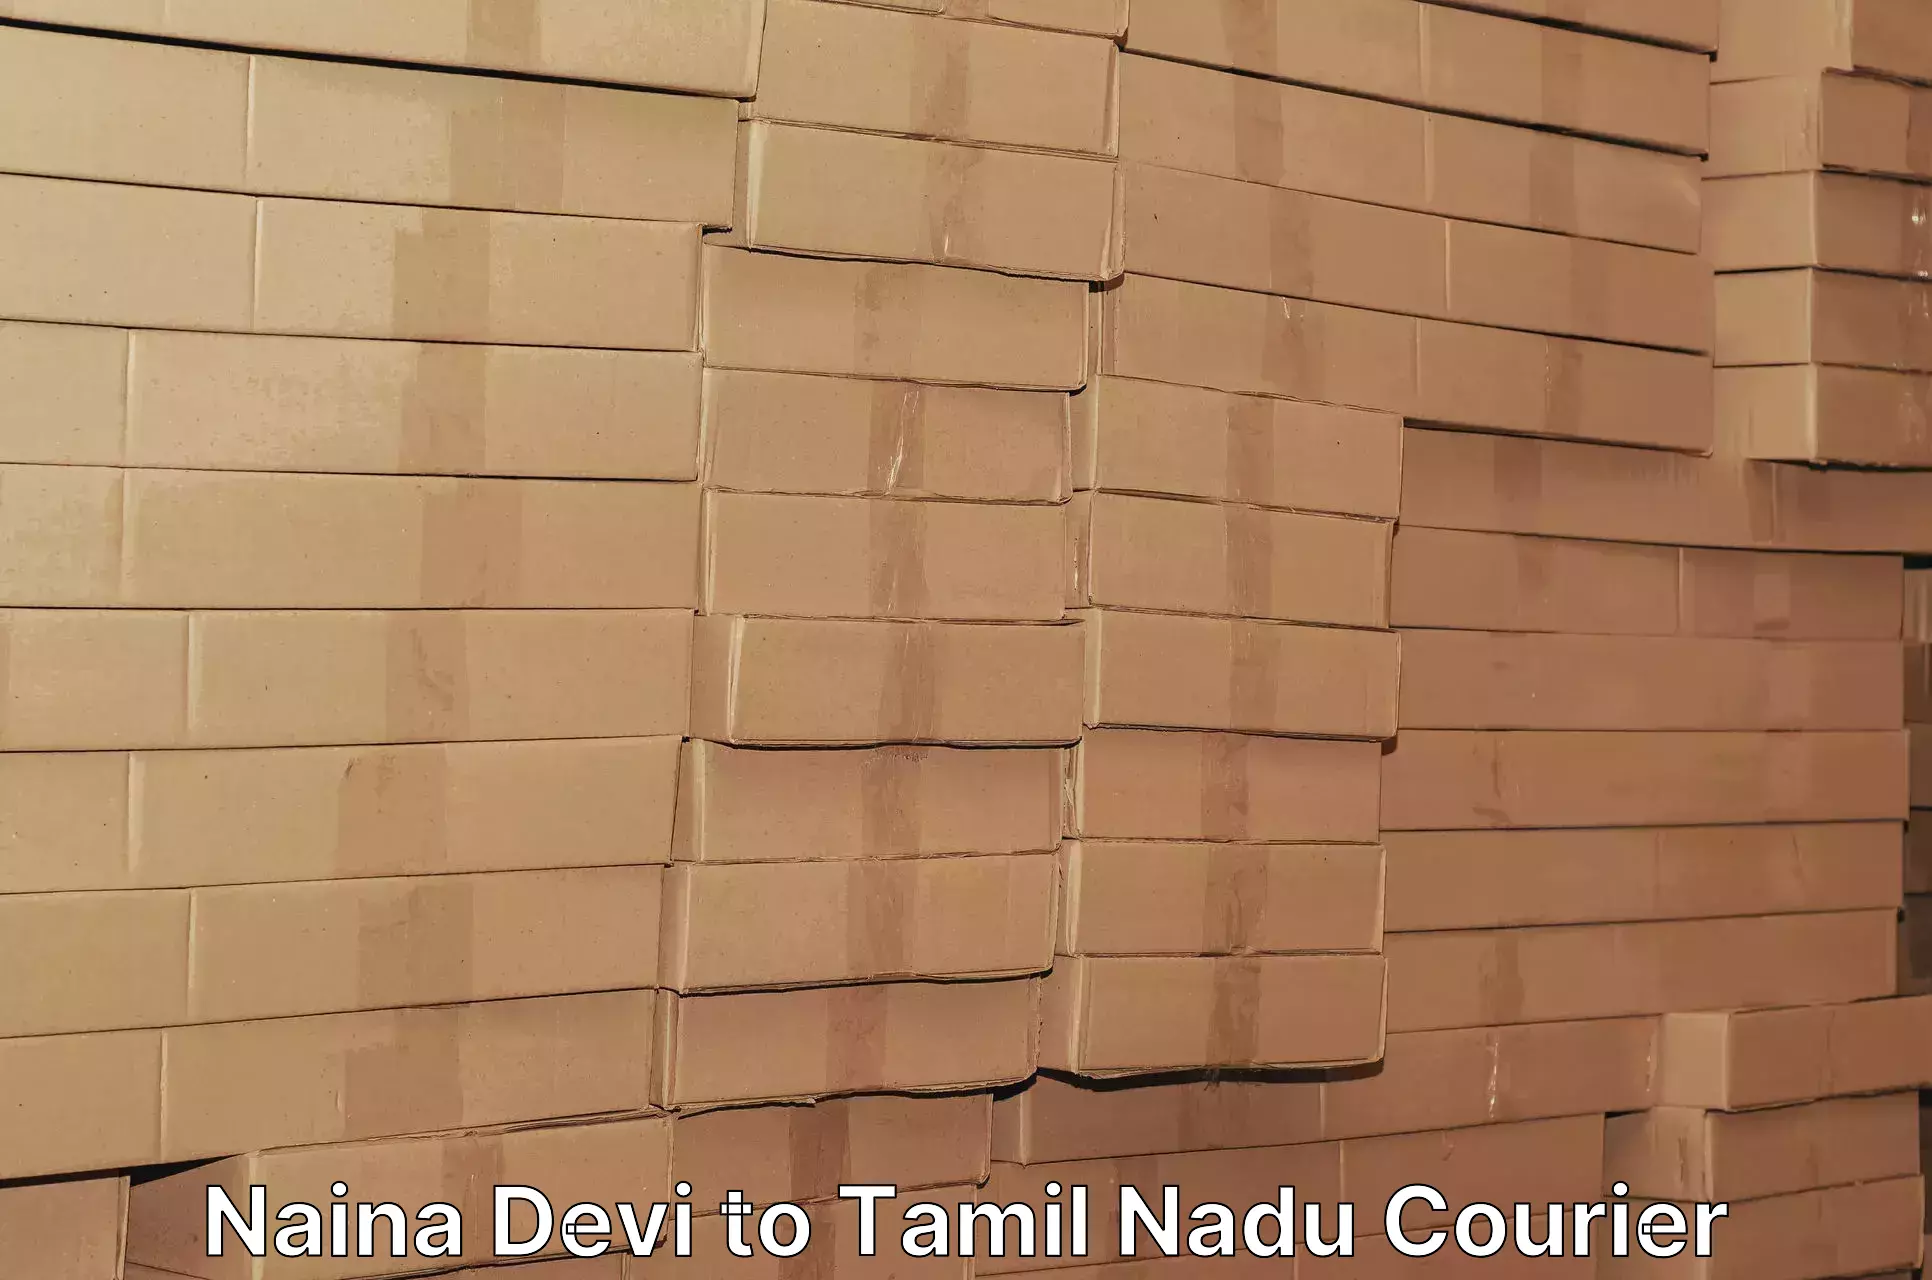 Urgent courier needs Naina Devi to Ambattur